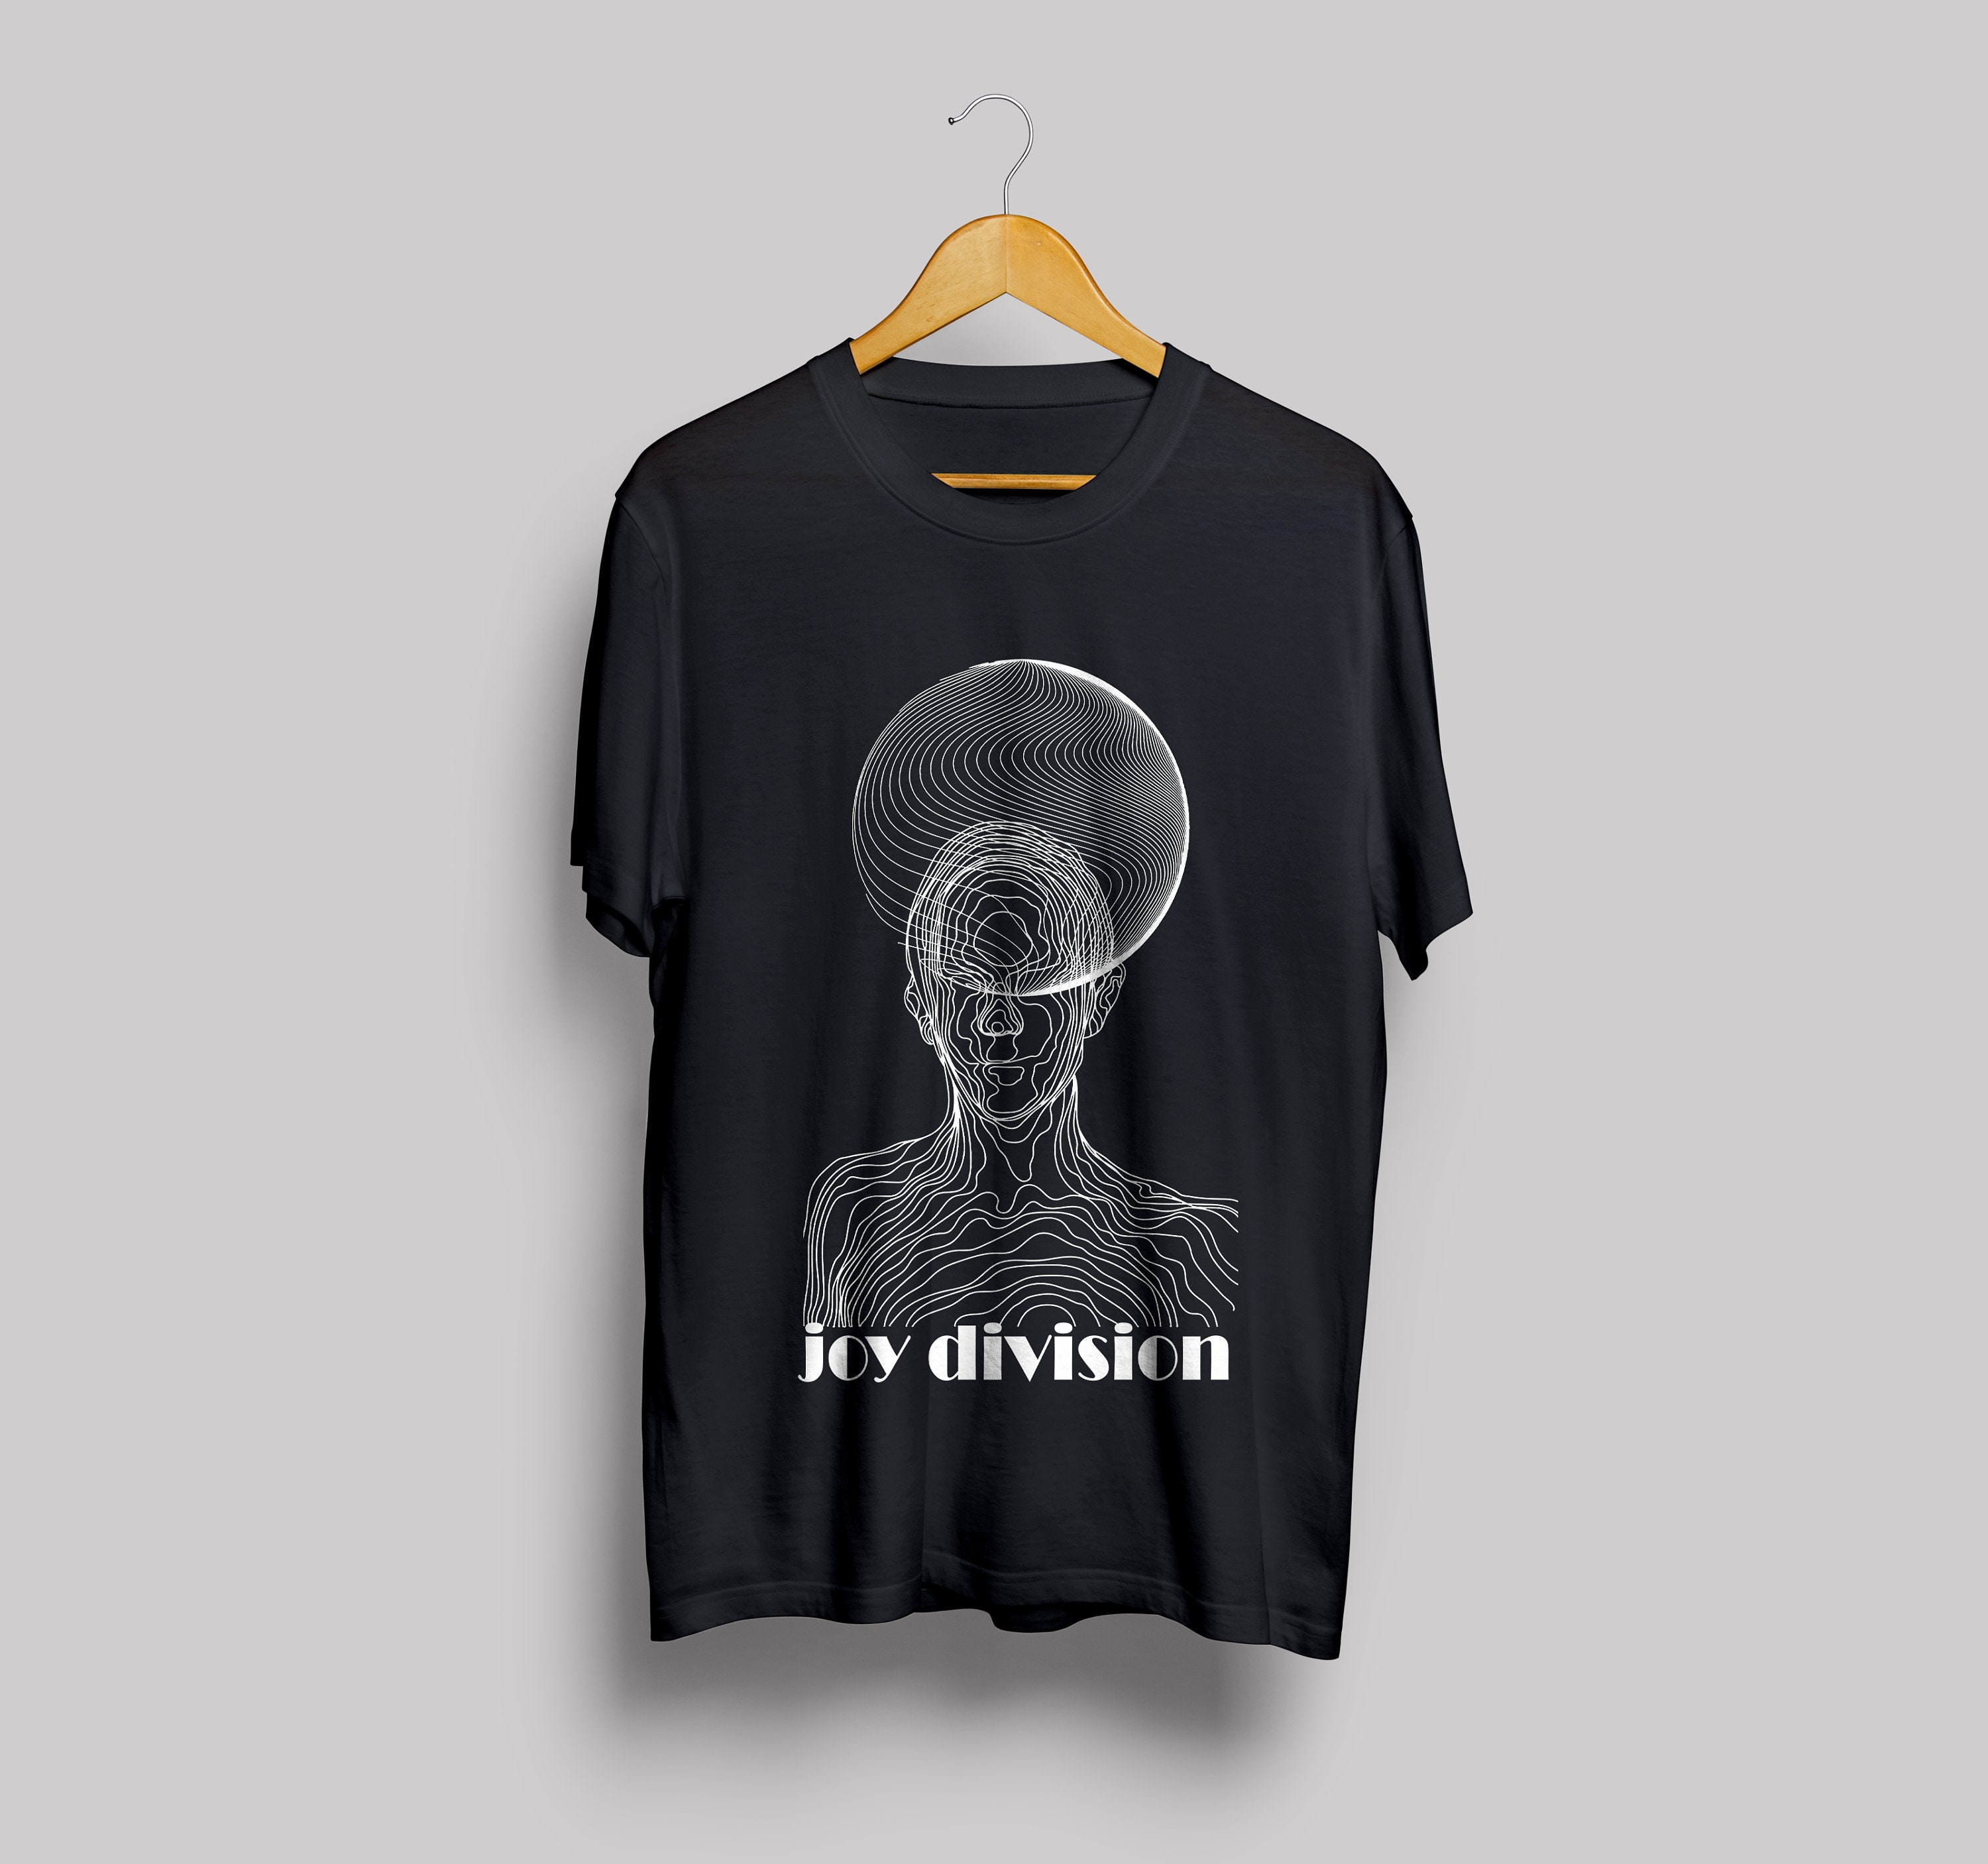 Discover Joy Division Vintage T-Shirt | Love Will Tear Us Apart | Disorder | Transmission | T-Shirt